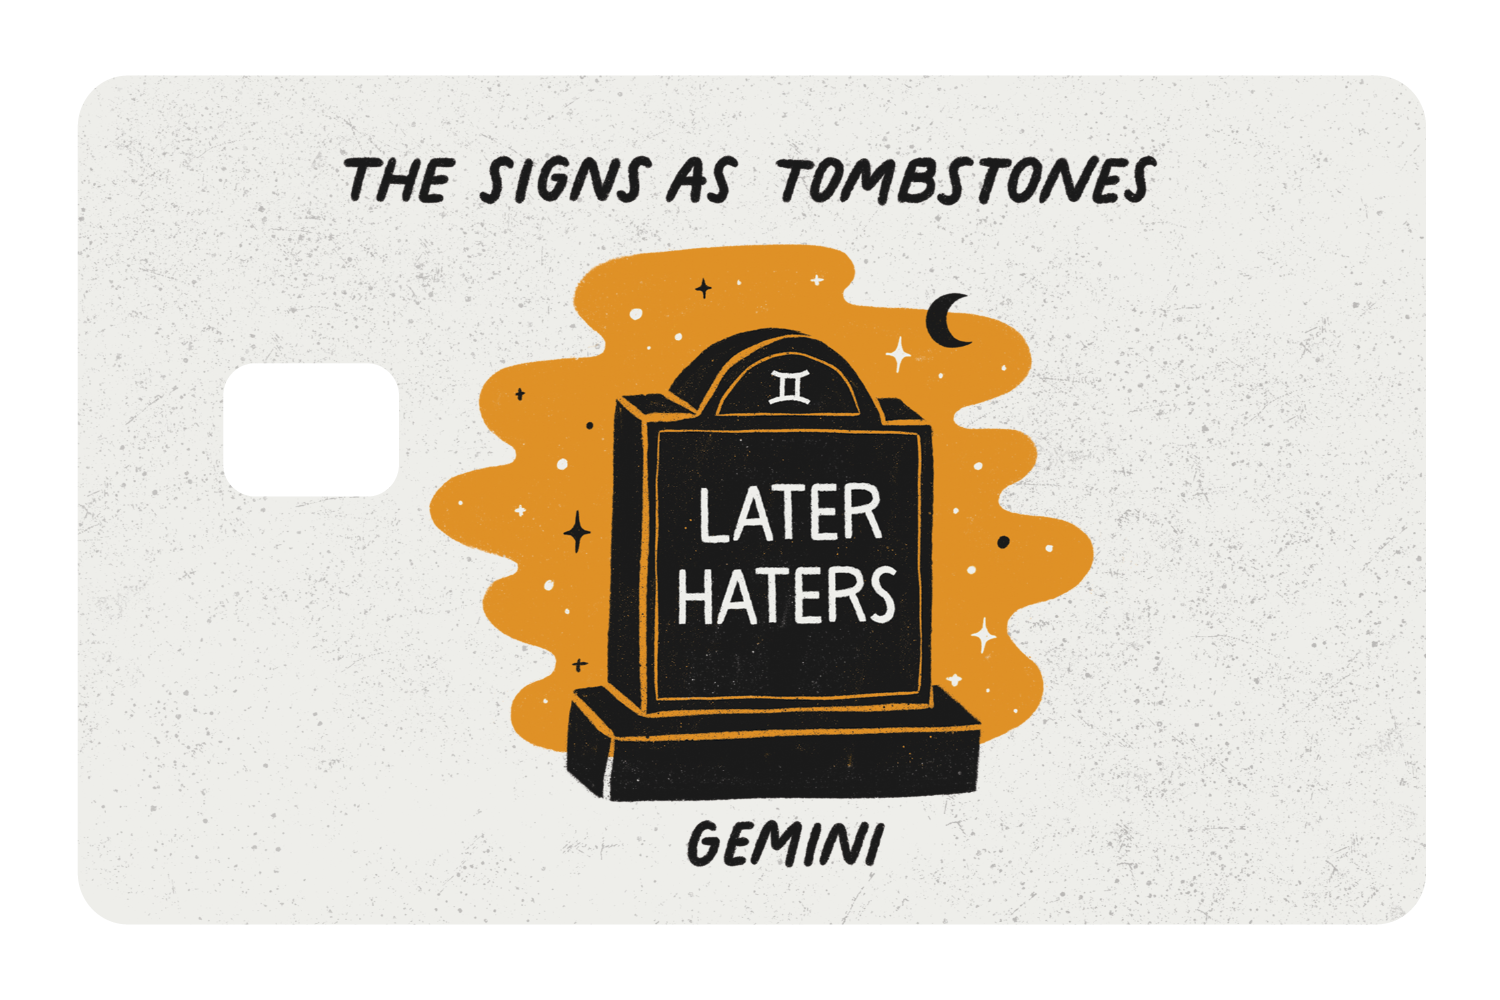 Gemini as a Tombstone